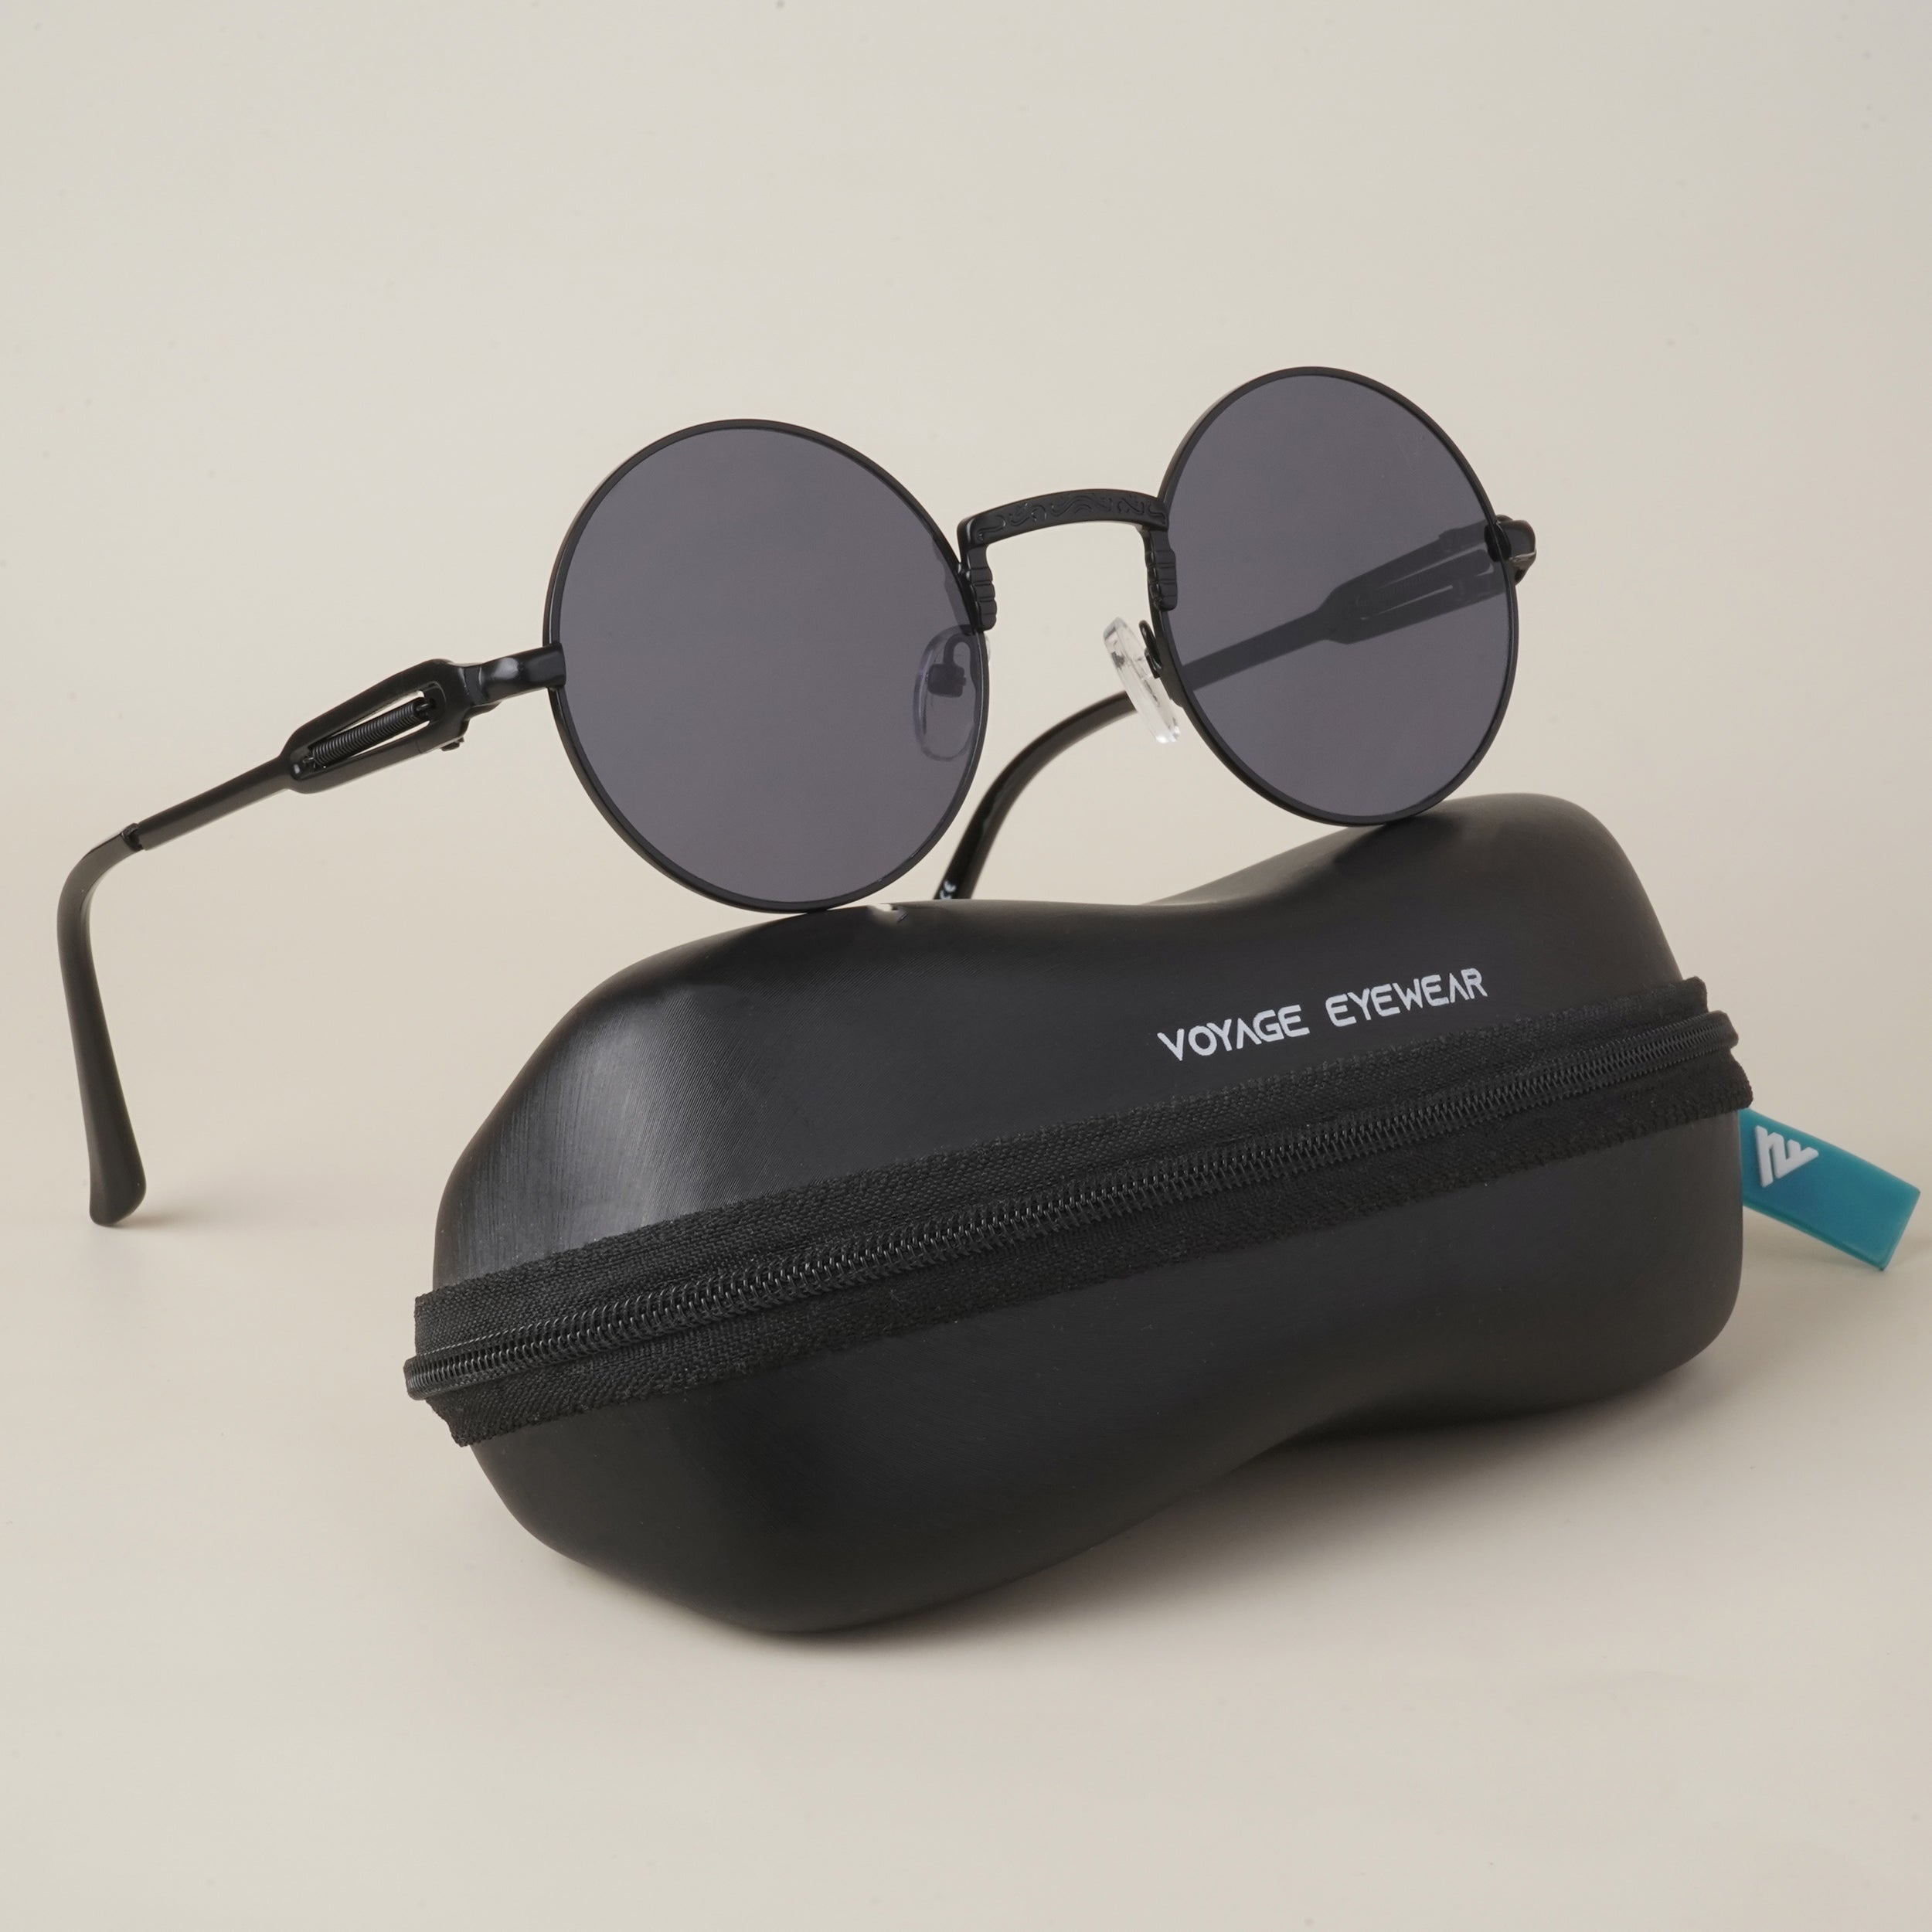 Voyage Round Black Sunglasses - MG3214